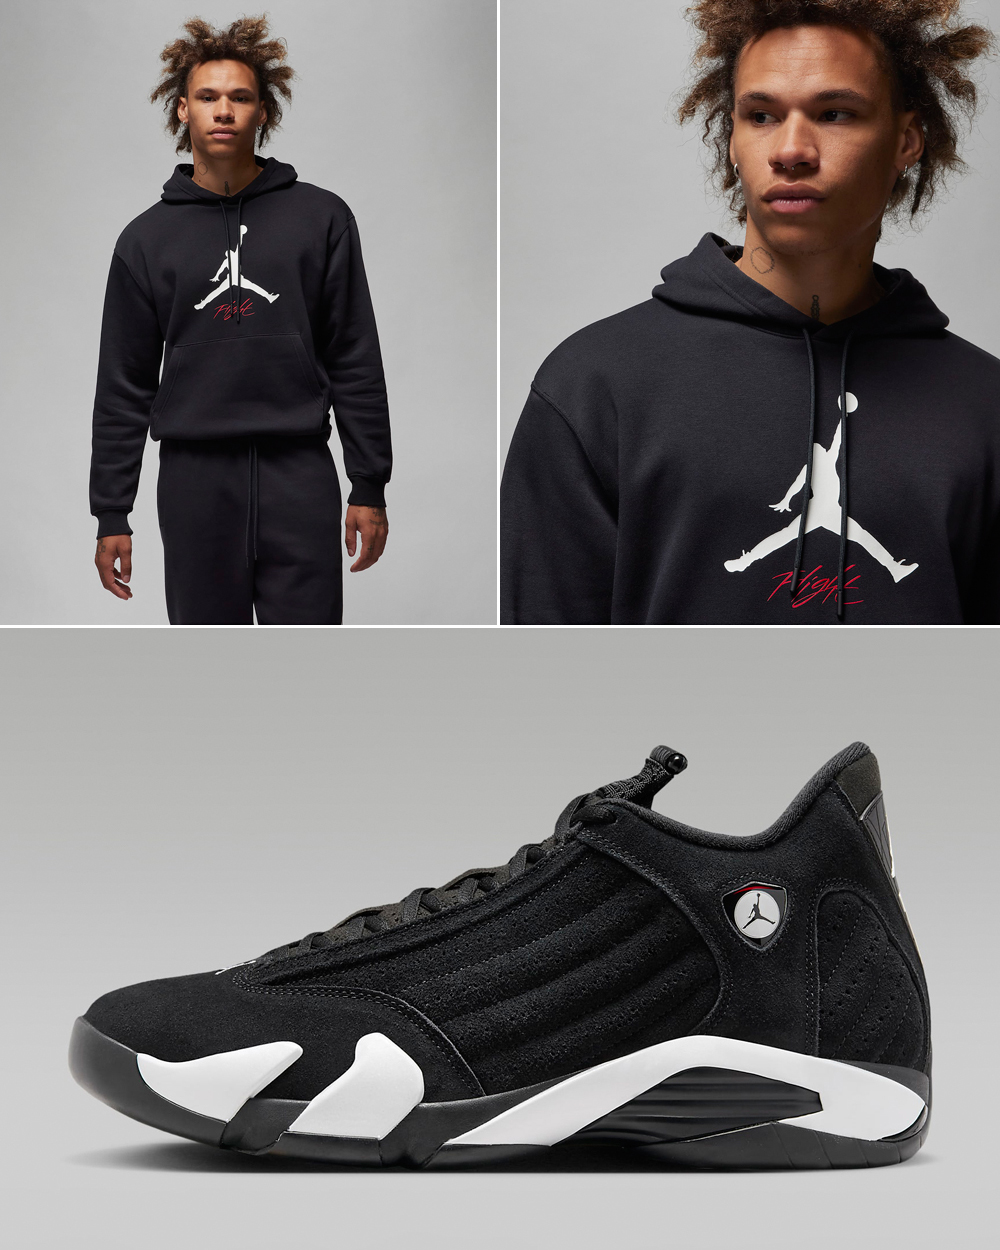 Air-Jordan-14-Black-White-Hoodie-Pants-Matching-Outfit